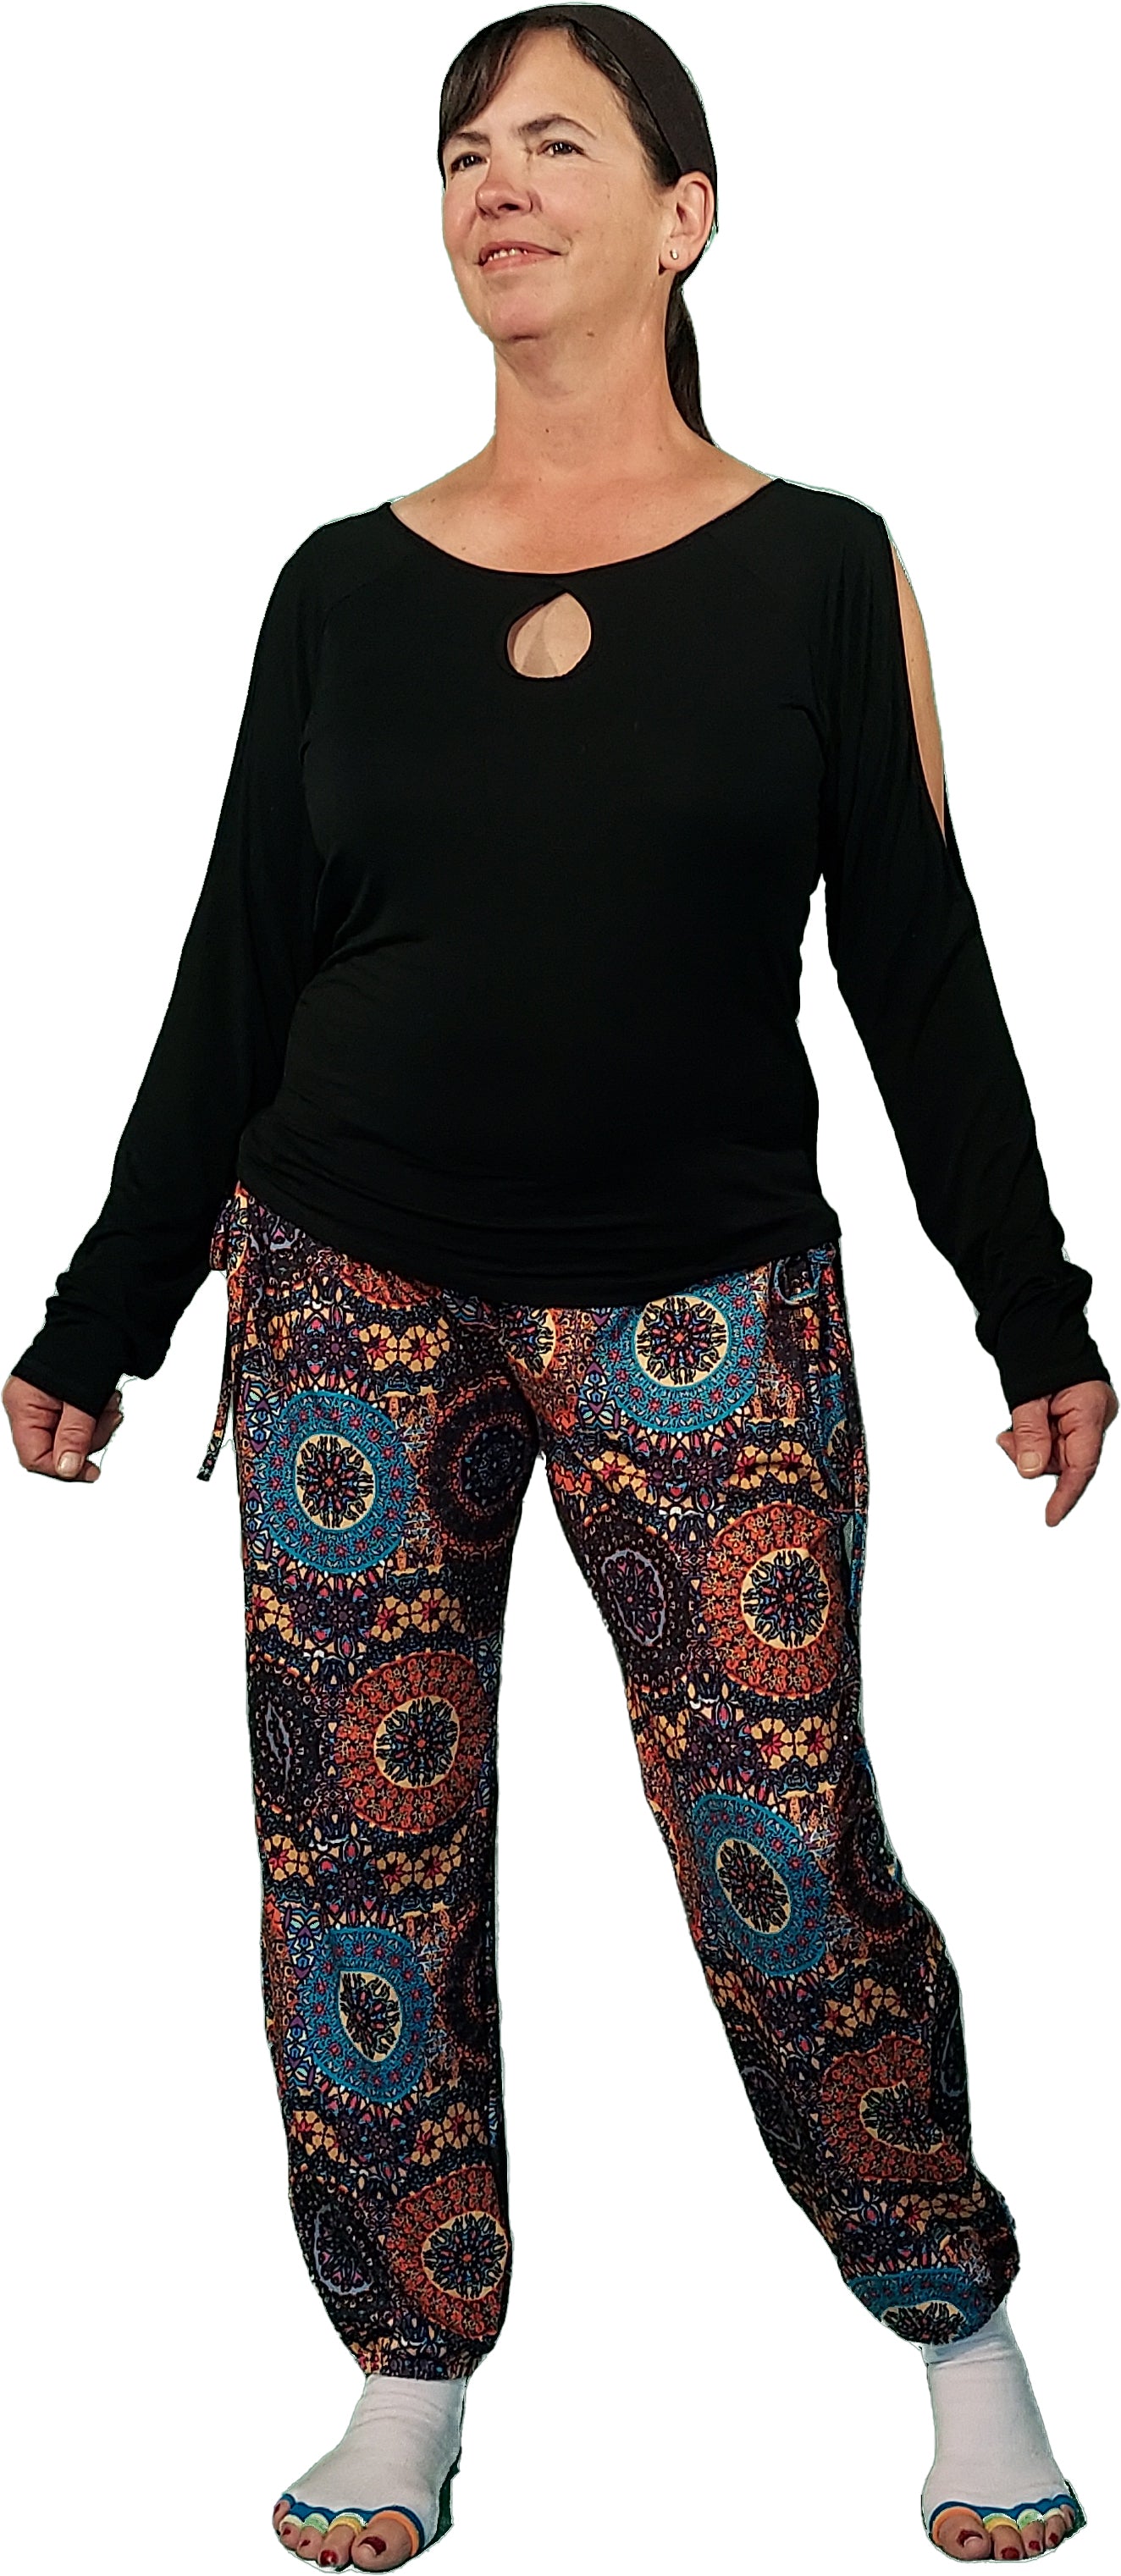 YOGAZ Mandala Print Pants with our Signature Pocket in Pocket design